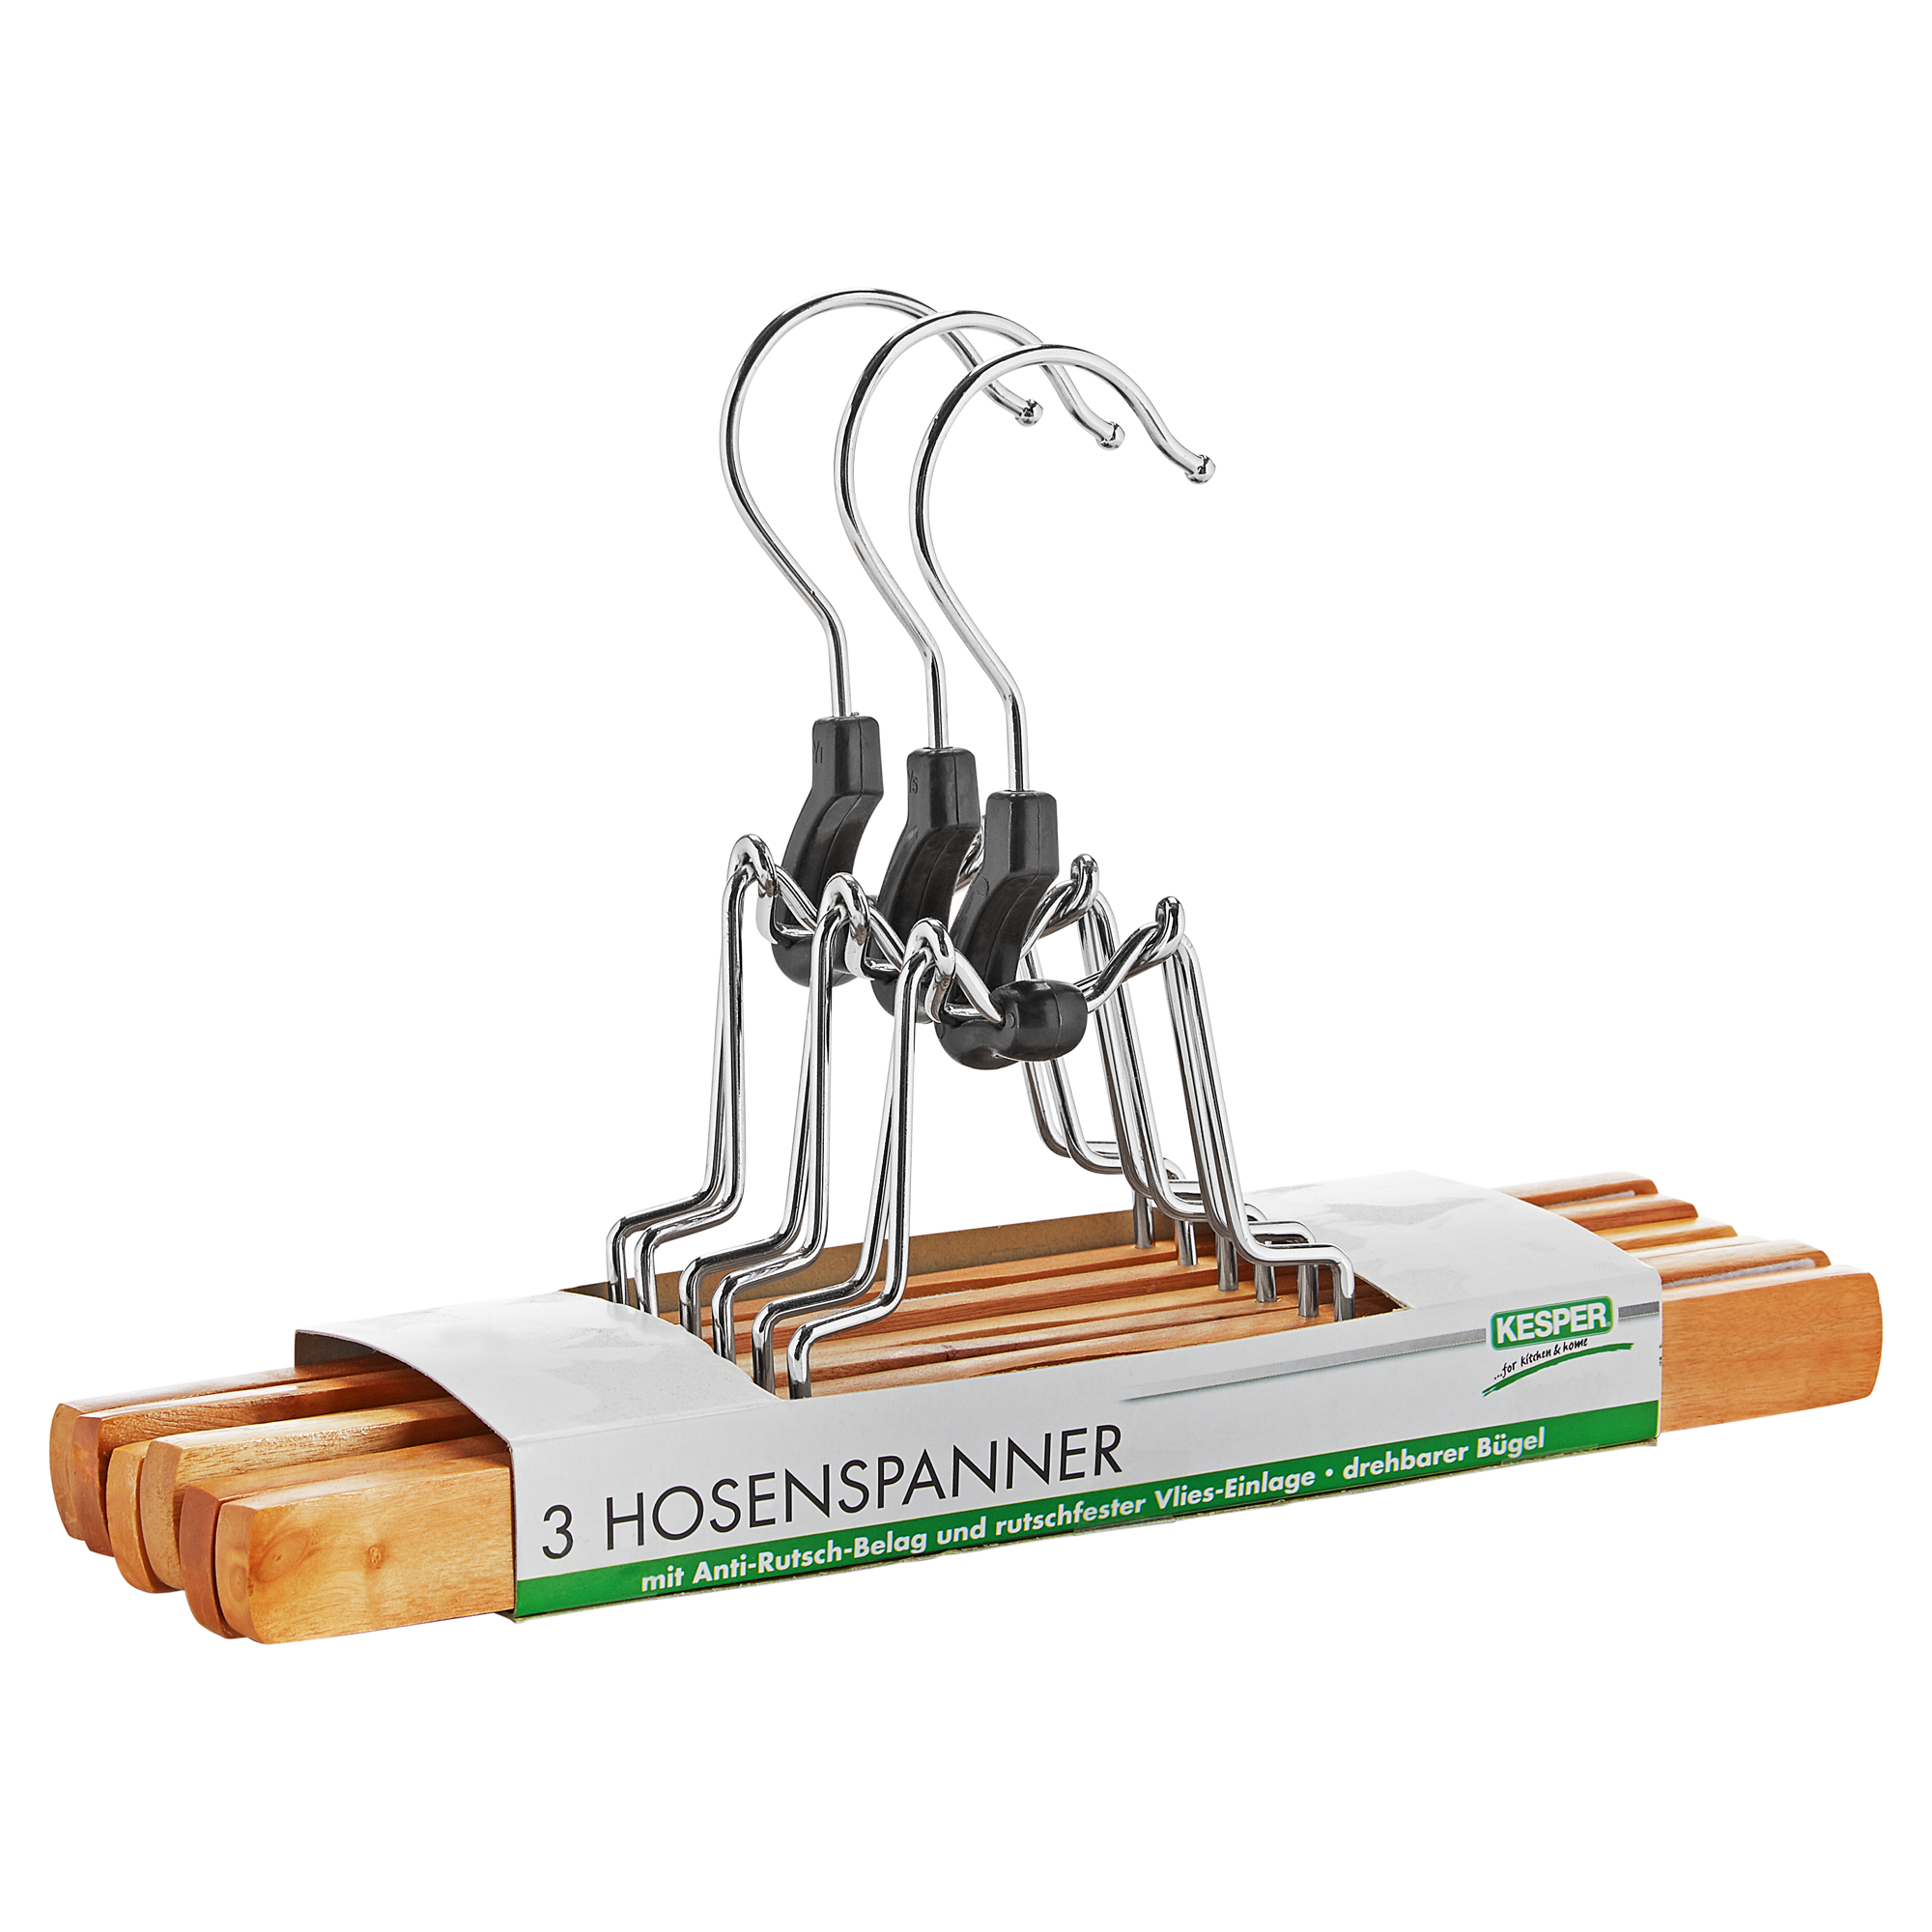 Hosenspanner Holz 3 Stück + product picture